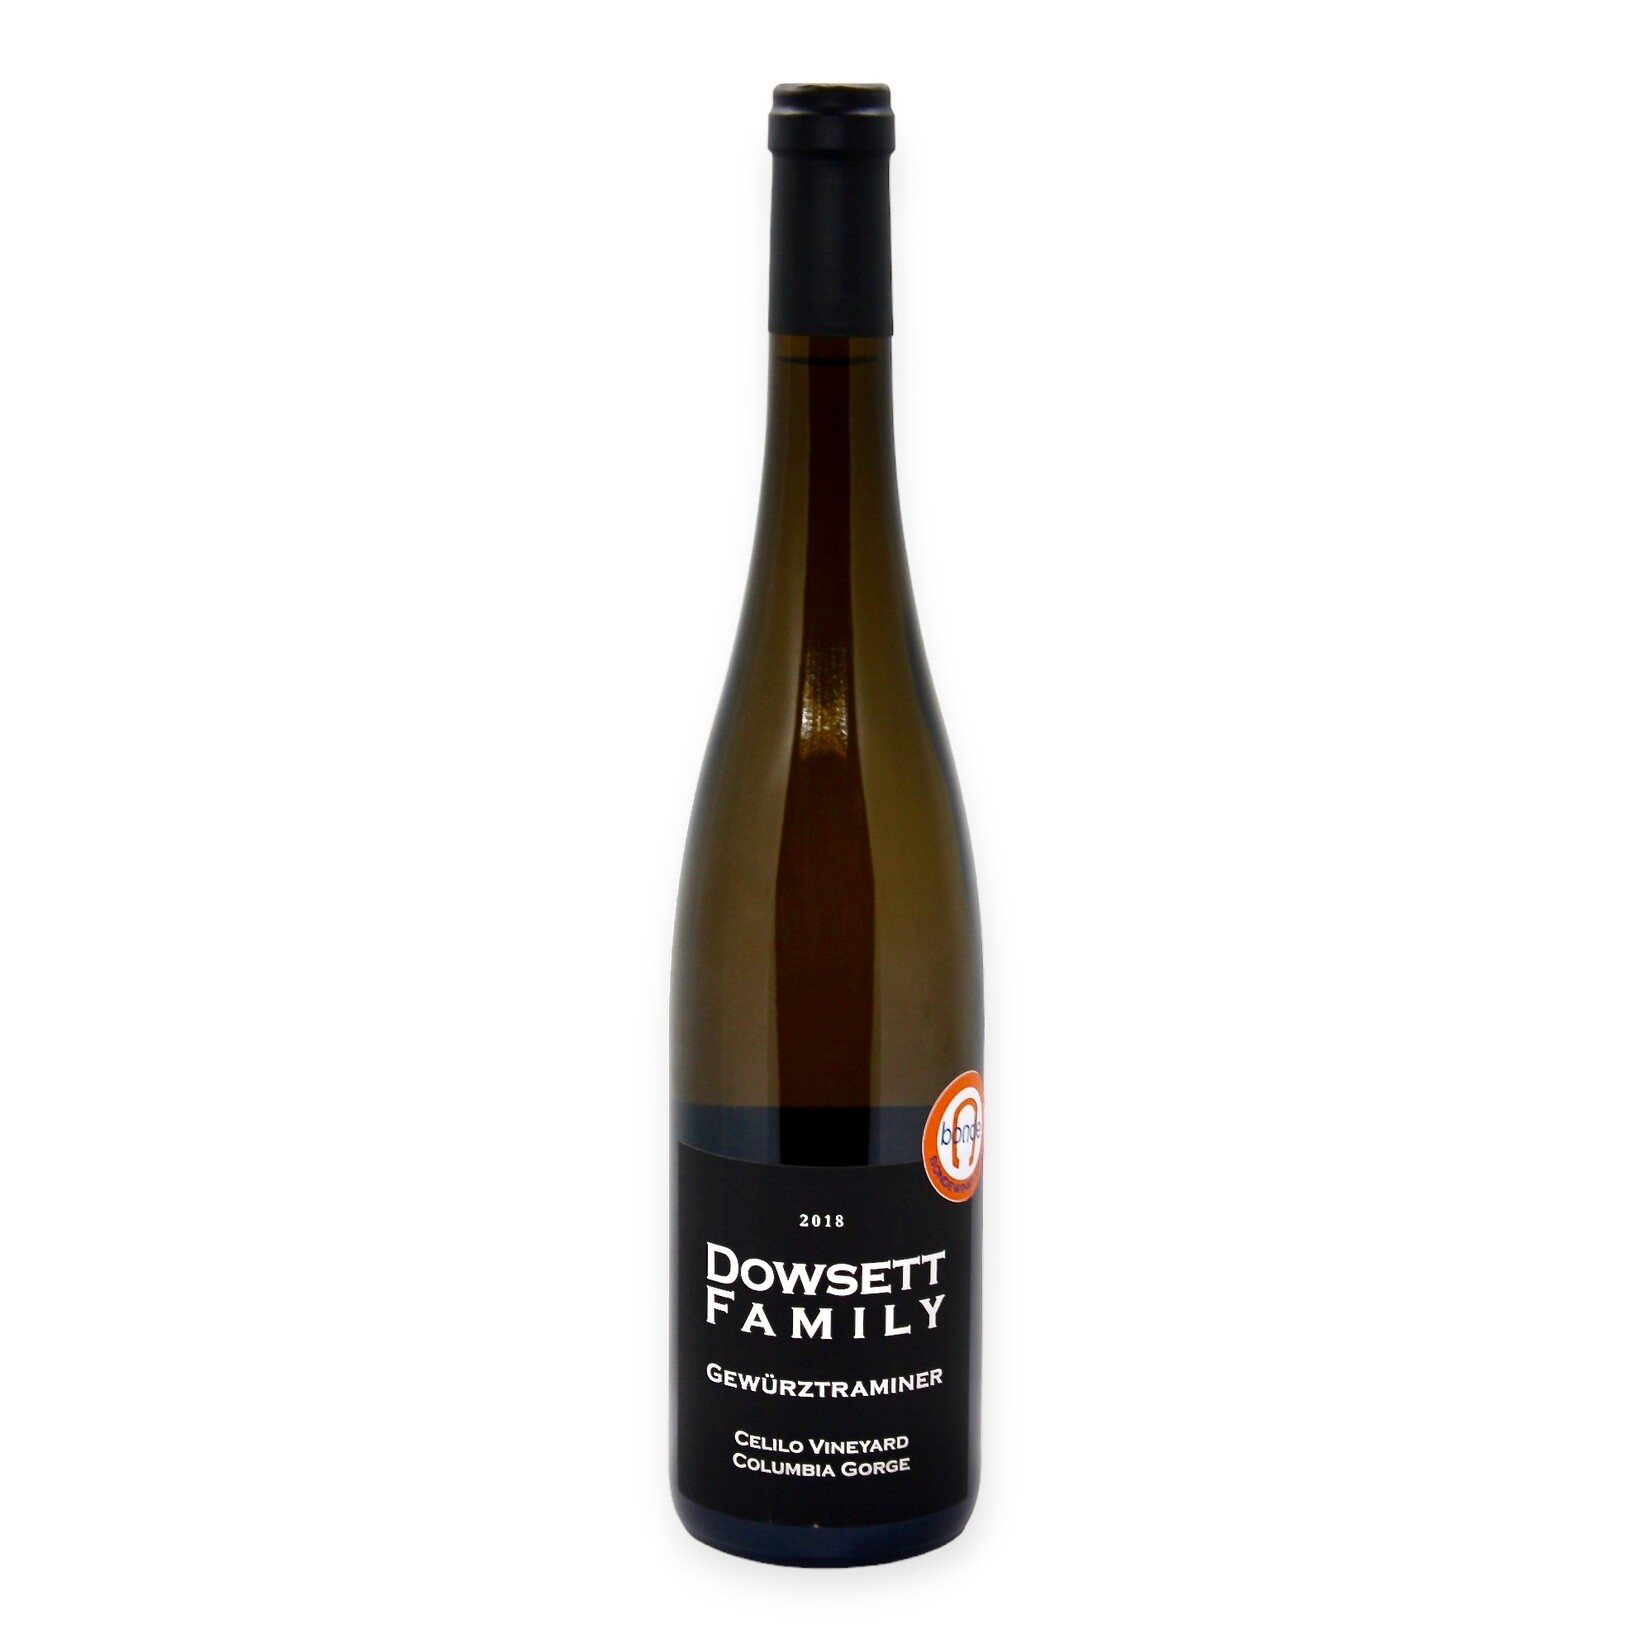 Dowsett Family Dowsett Family Winery, Gewürztraminer 2018, Celilo Vineyard, Columbia Gorge, WA